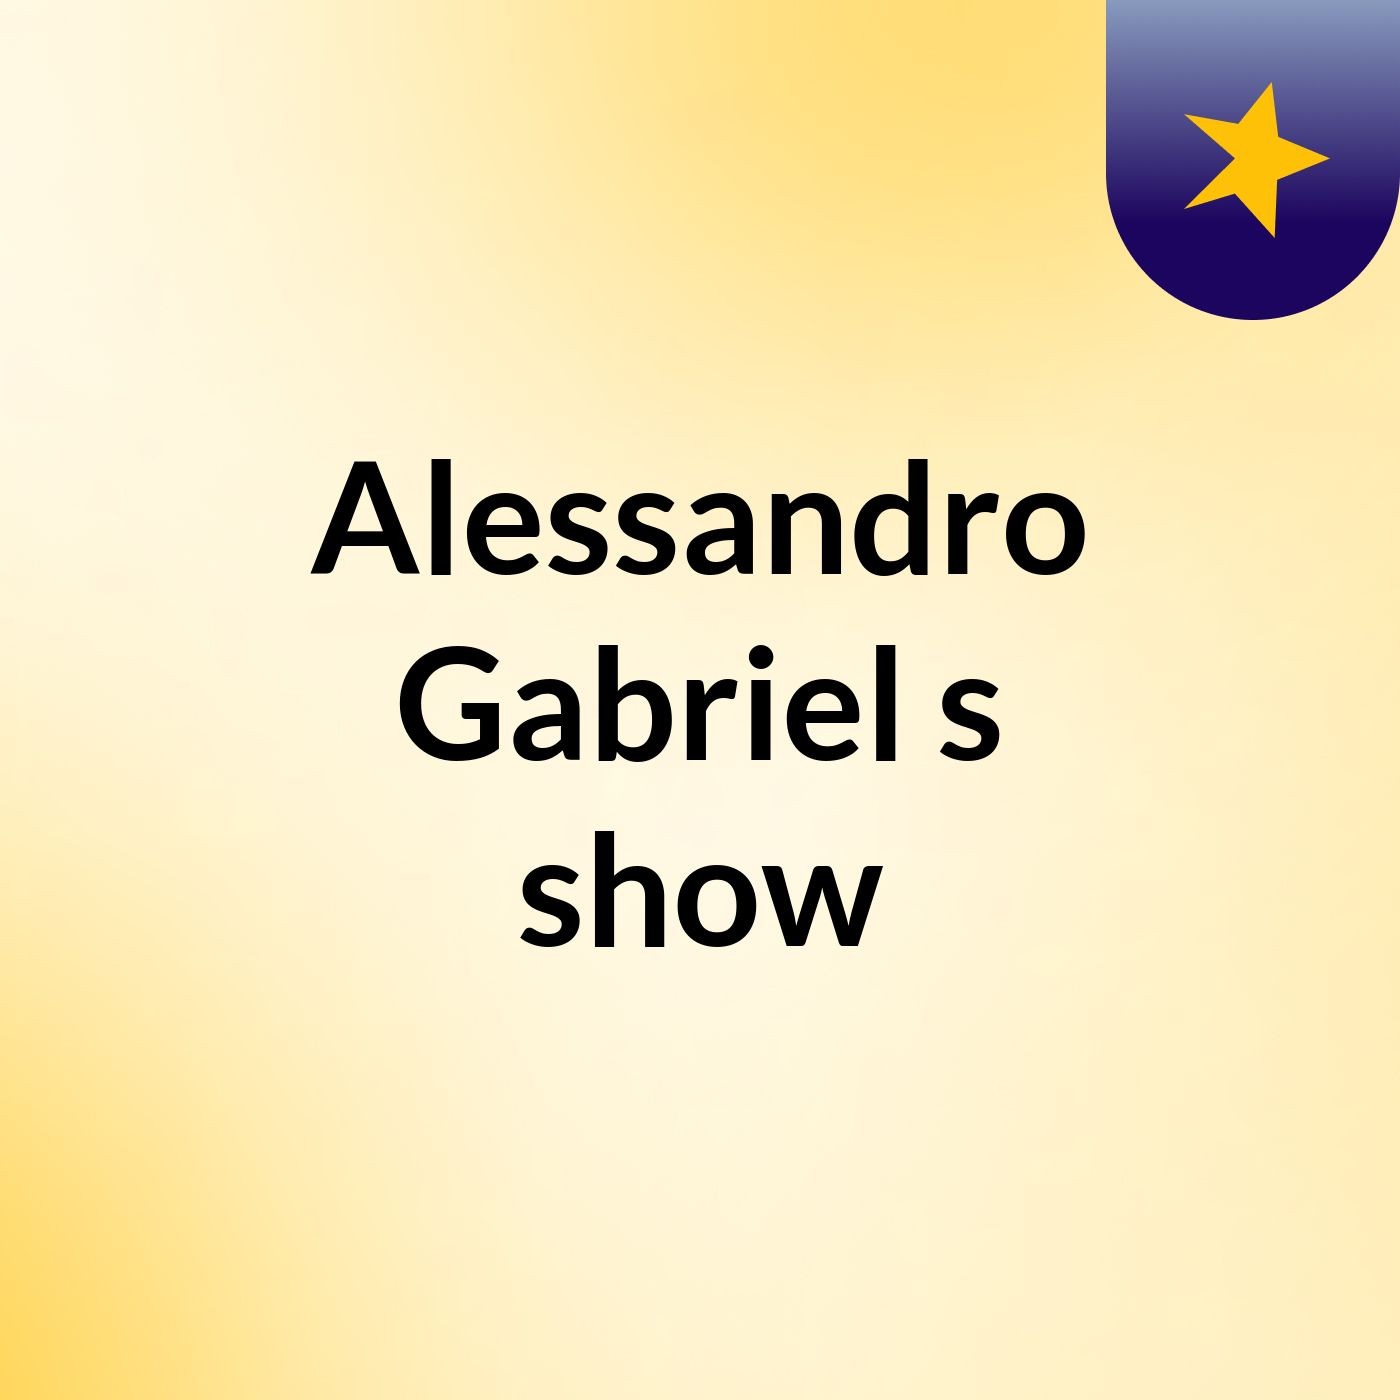 Alessandro Gabriel's show